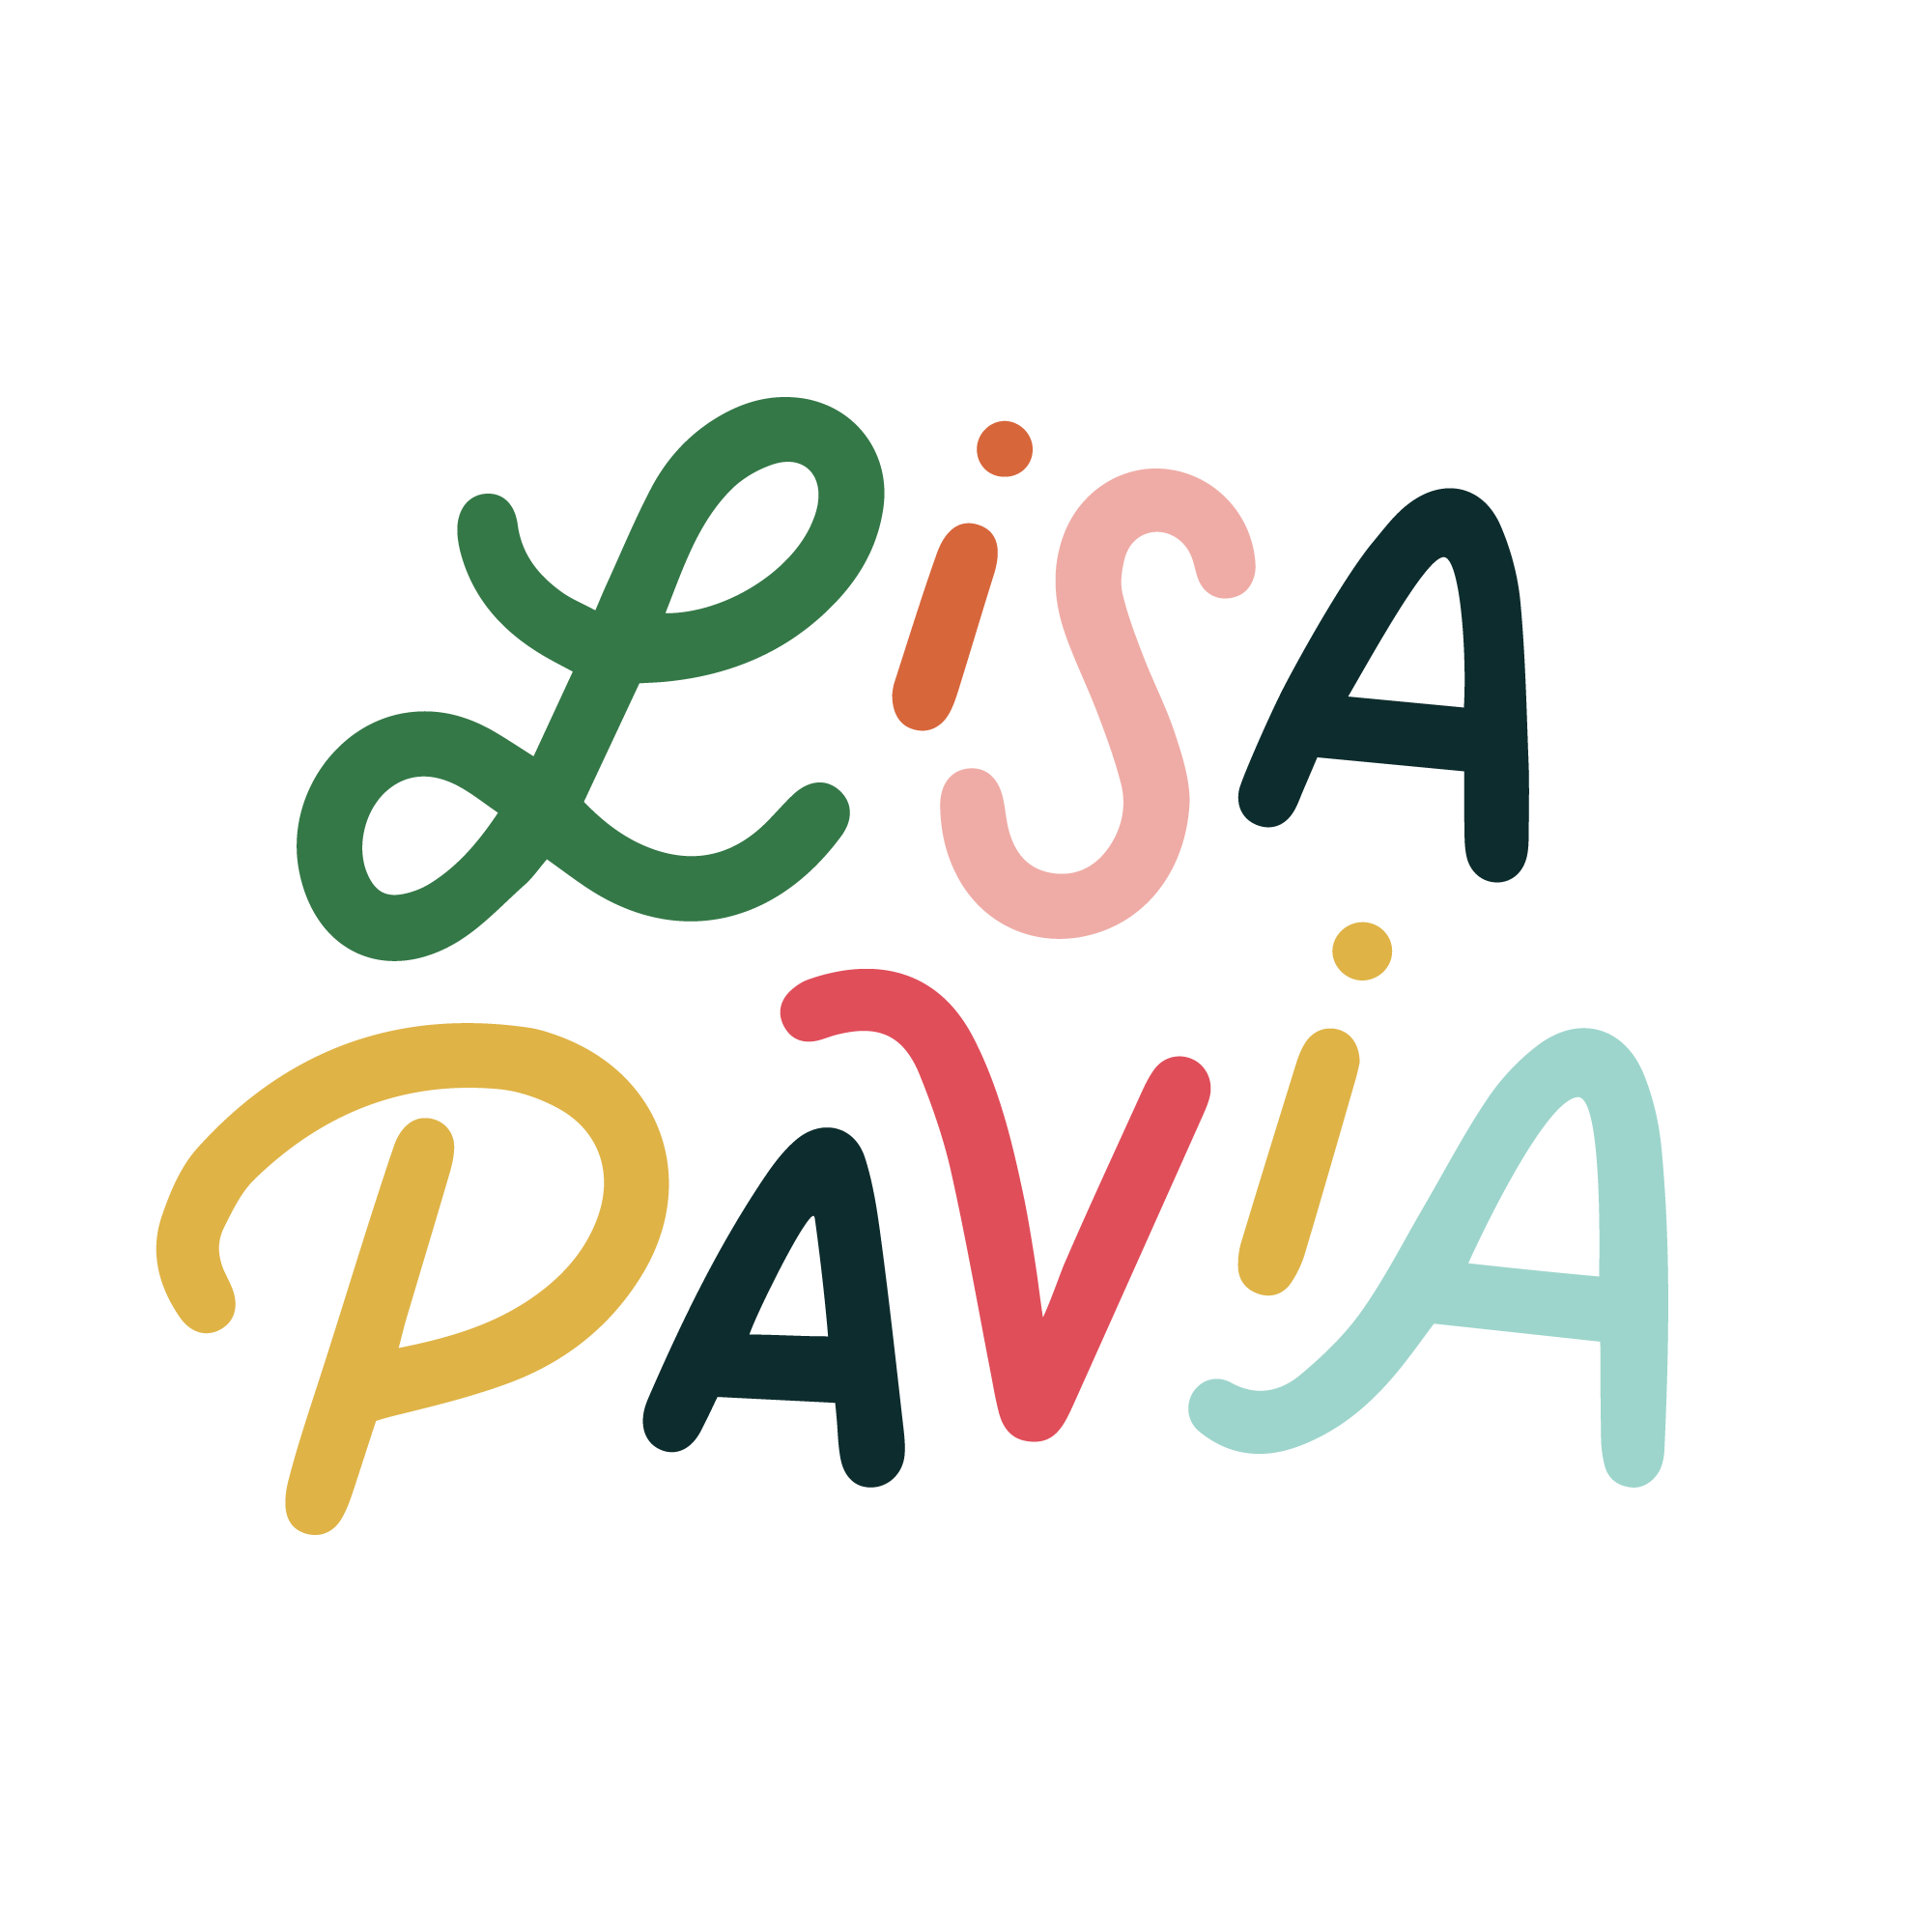 Lisa Pavia